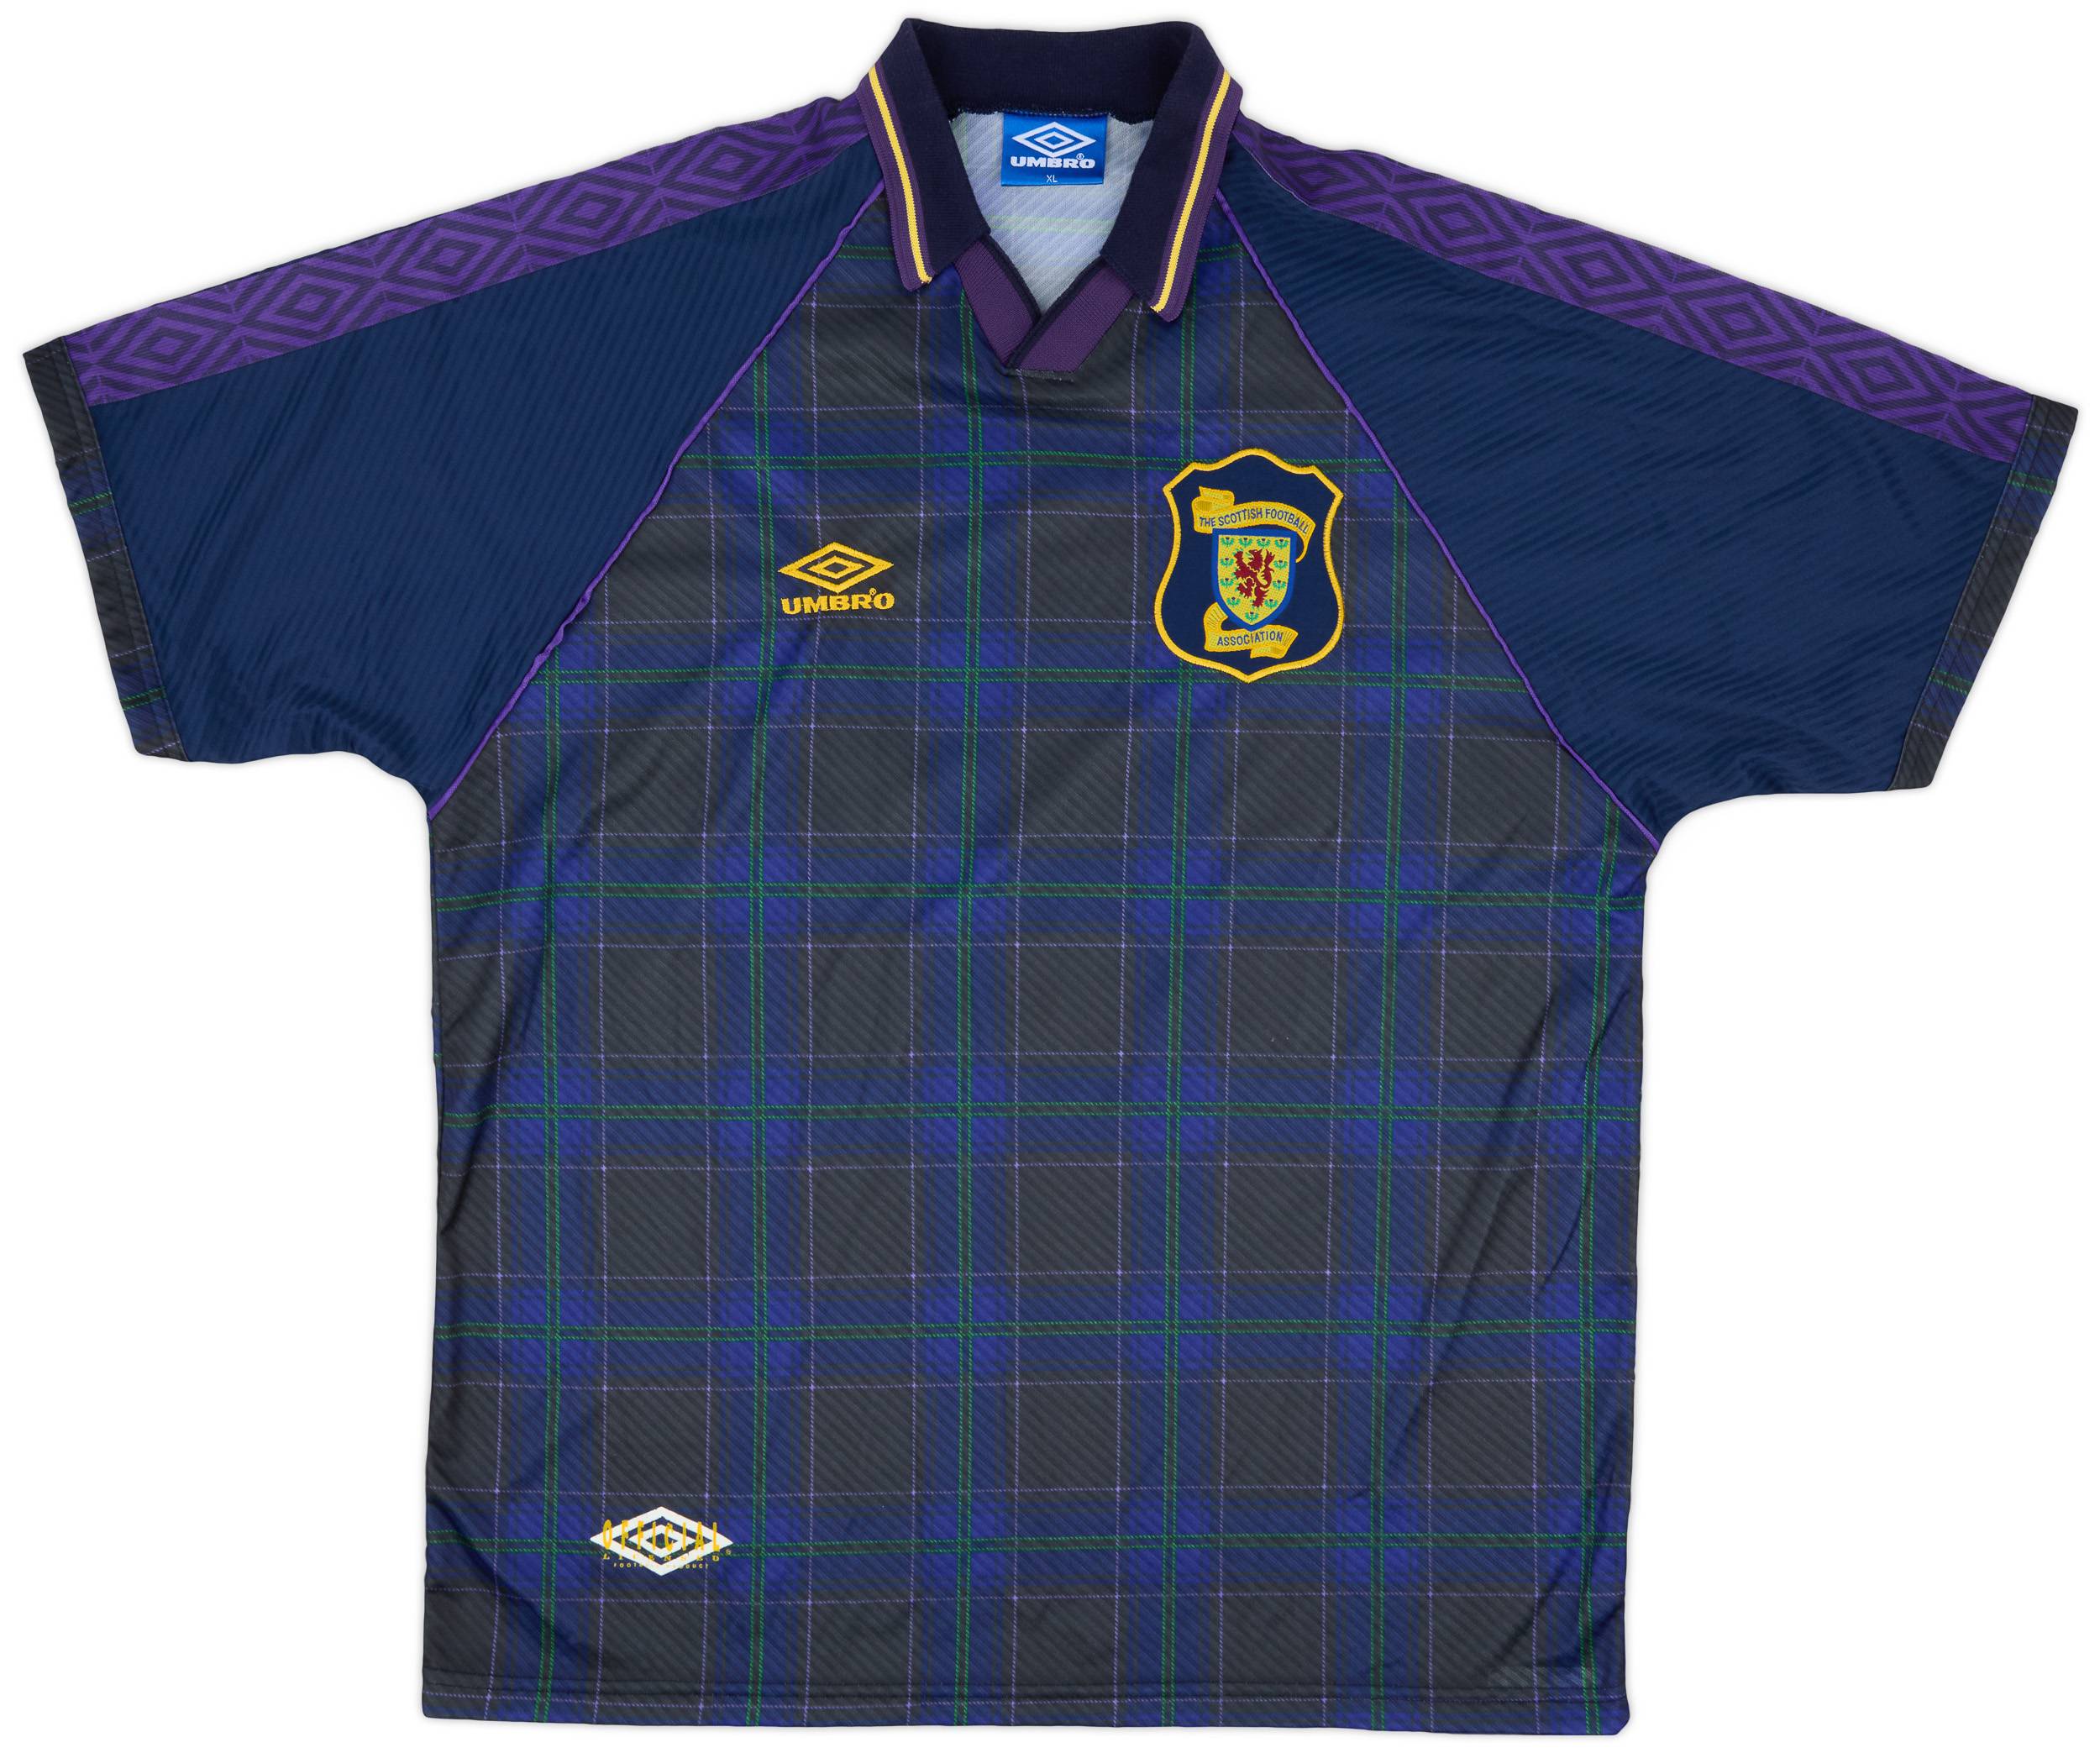 1994-96 Scotland Home Shirt - 9/10 - (XL)